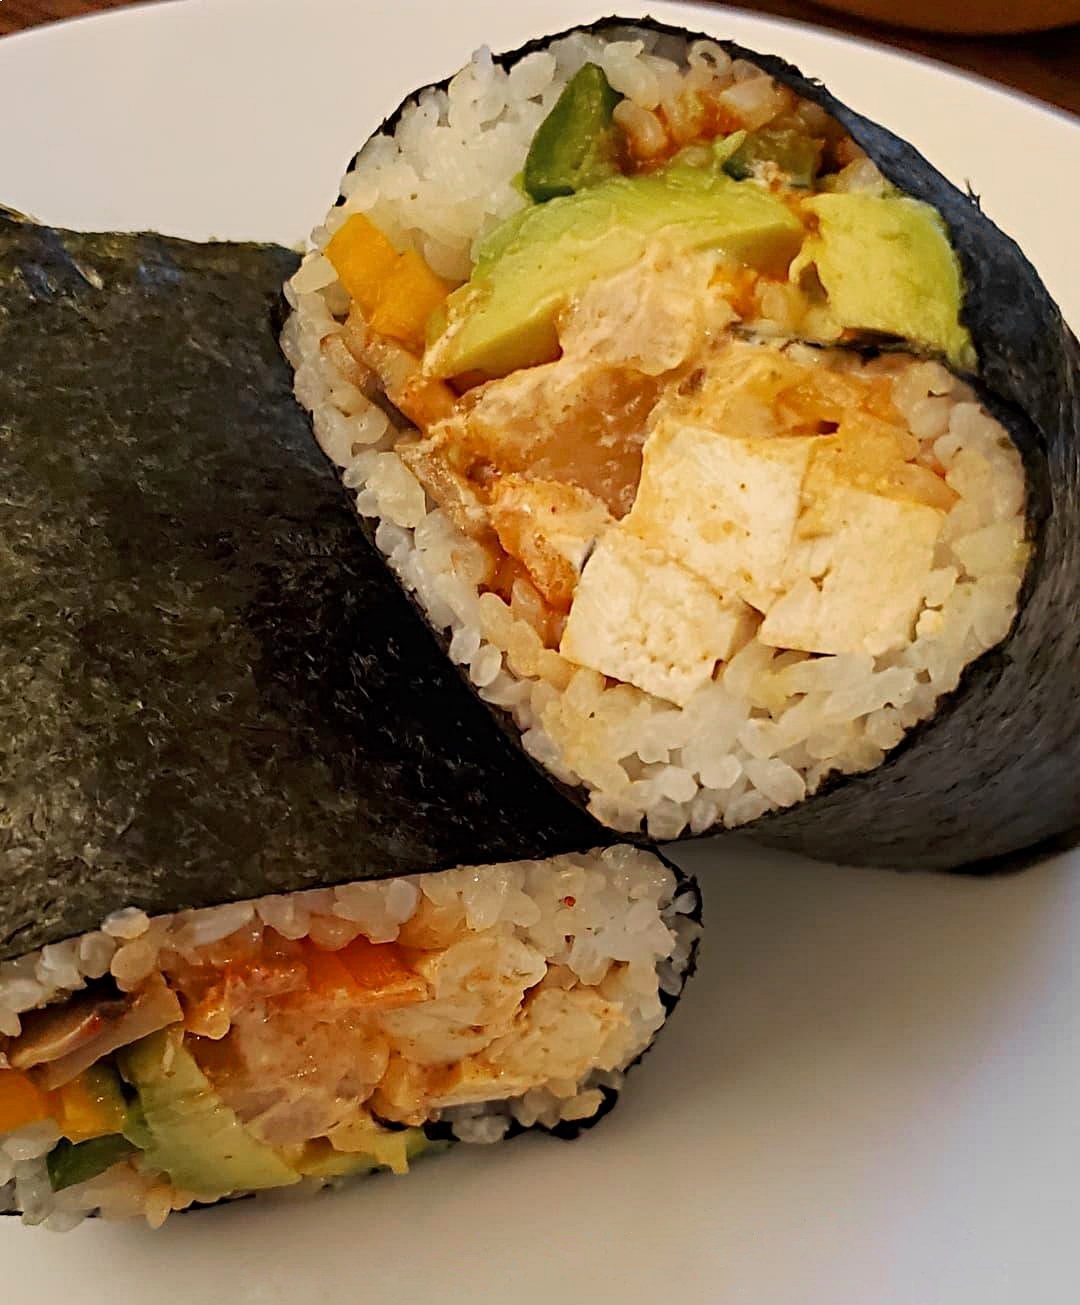 A sushi burrito filled with veggies and tofu